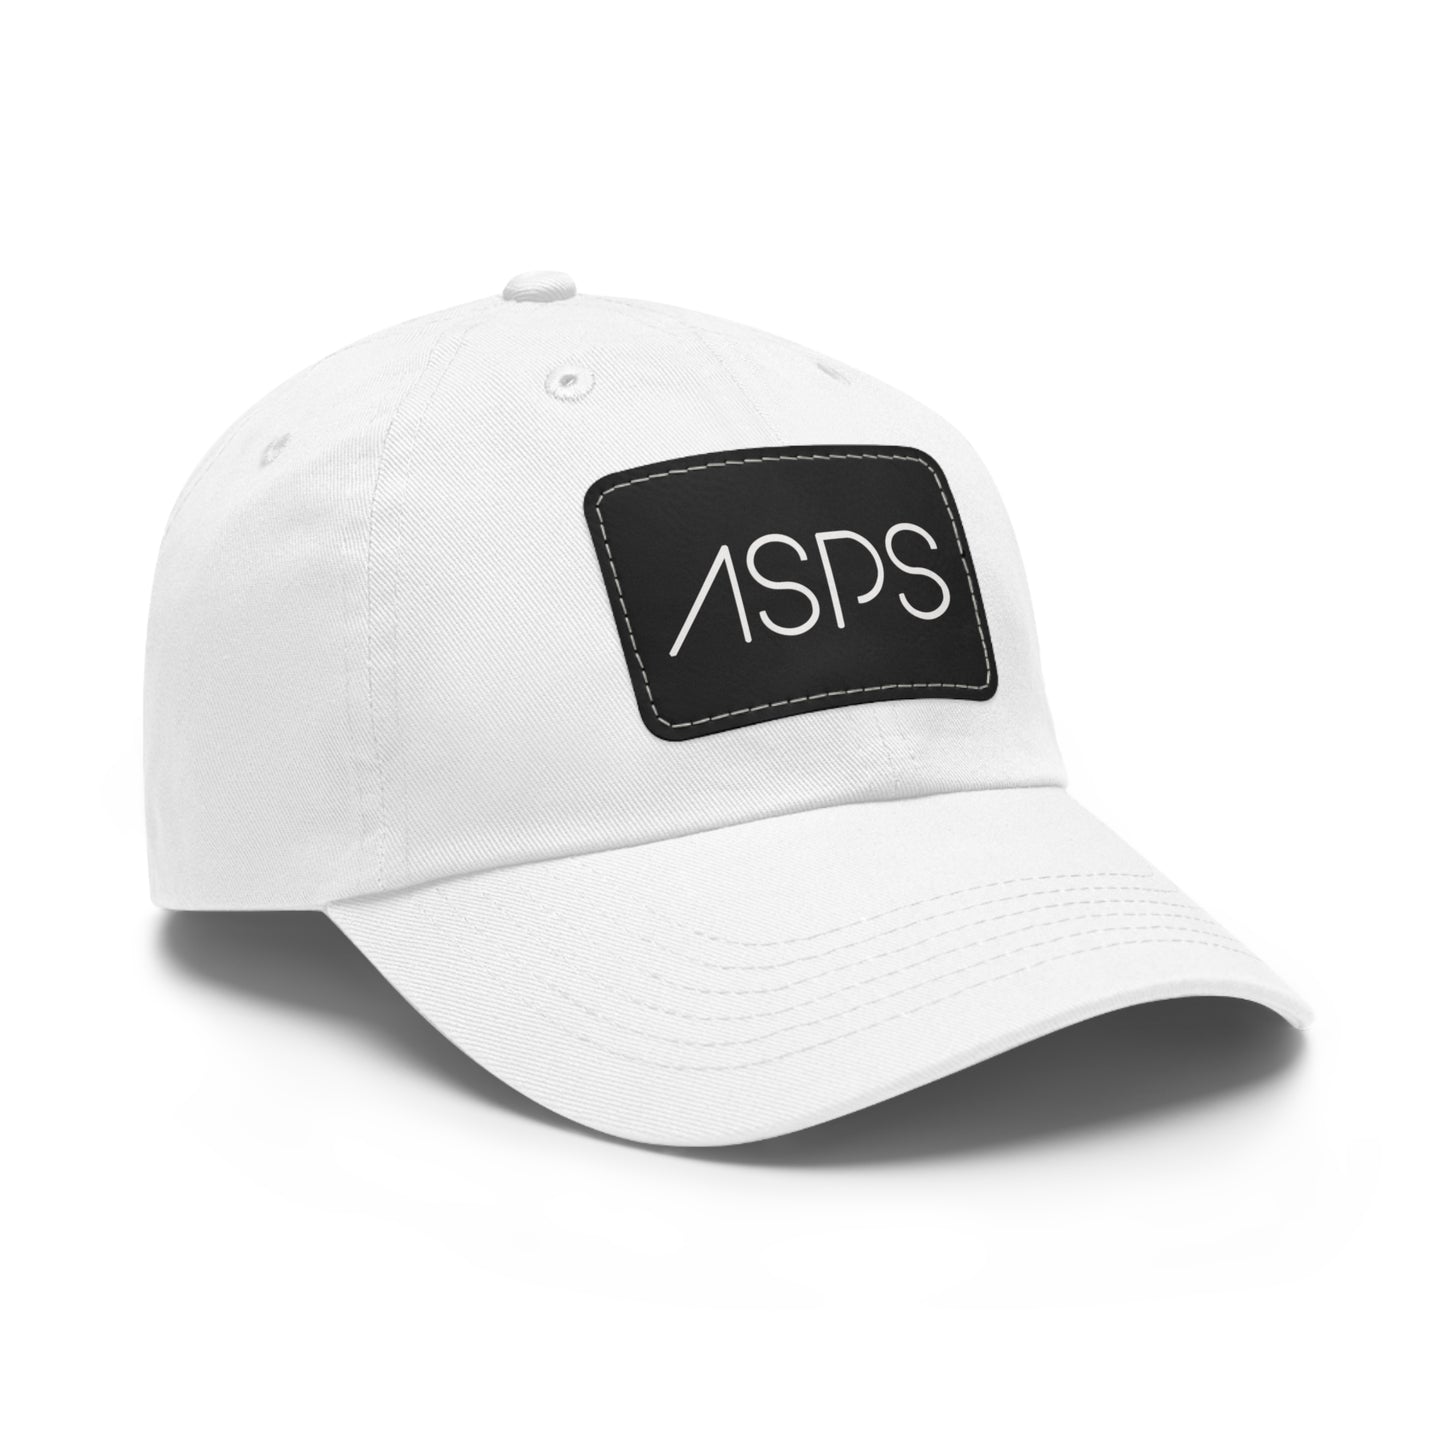 ASPS Branded Cap